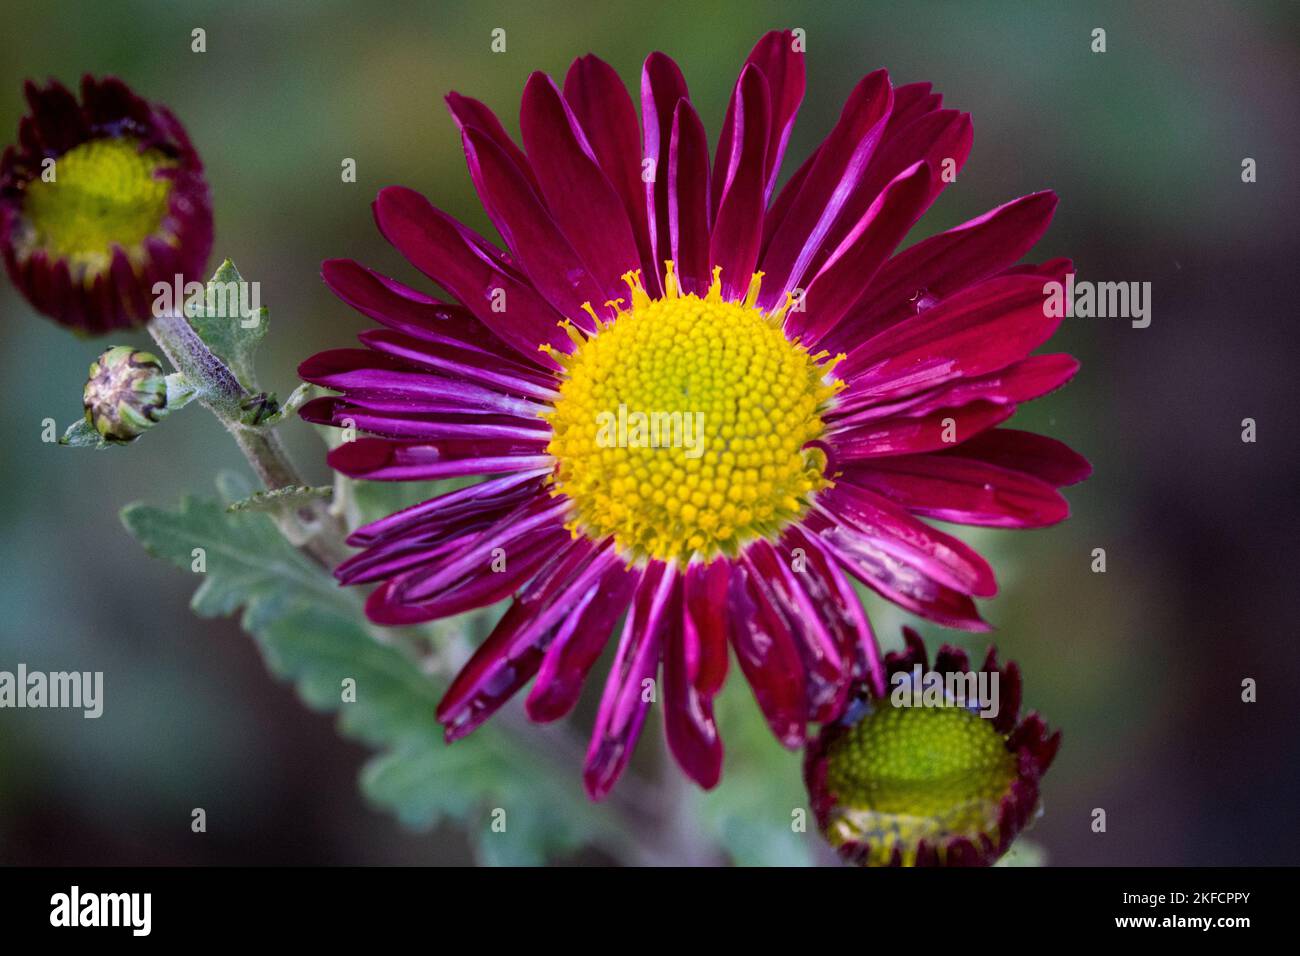 Red, Flower, Yellow center, Mum, Chrysanthemum, Bloom, Dendranthema, Blooming, Plant, Chrysanthemum 'Cousin Joan' Stock Photo